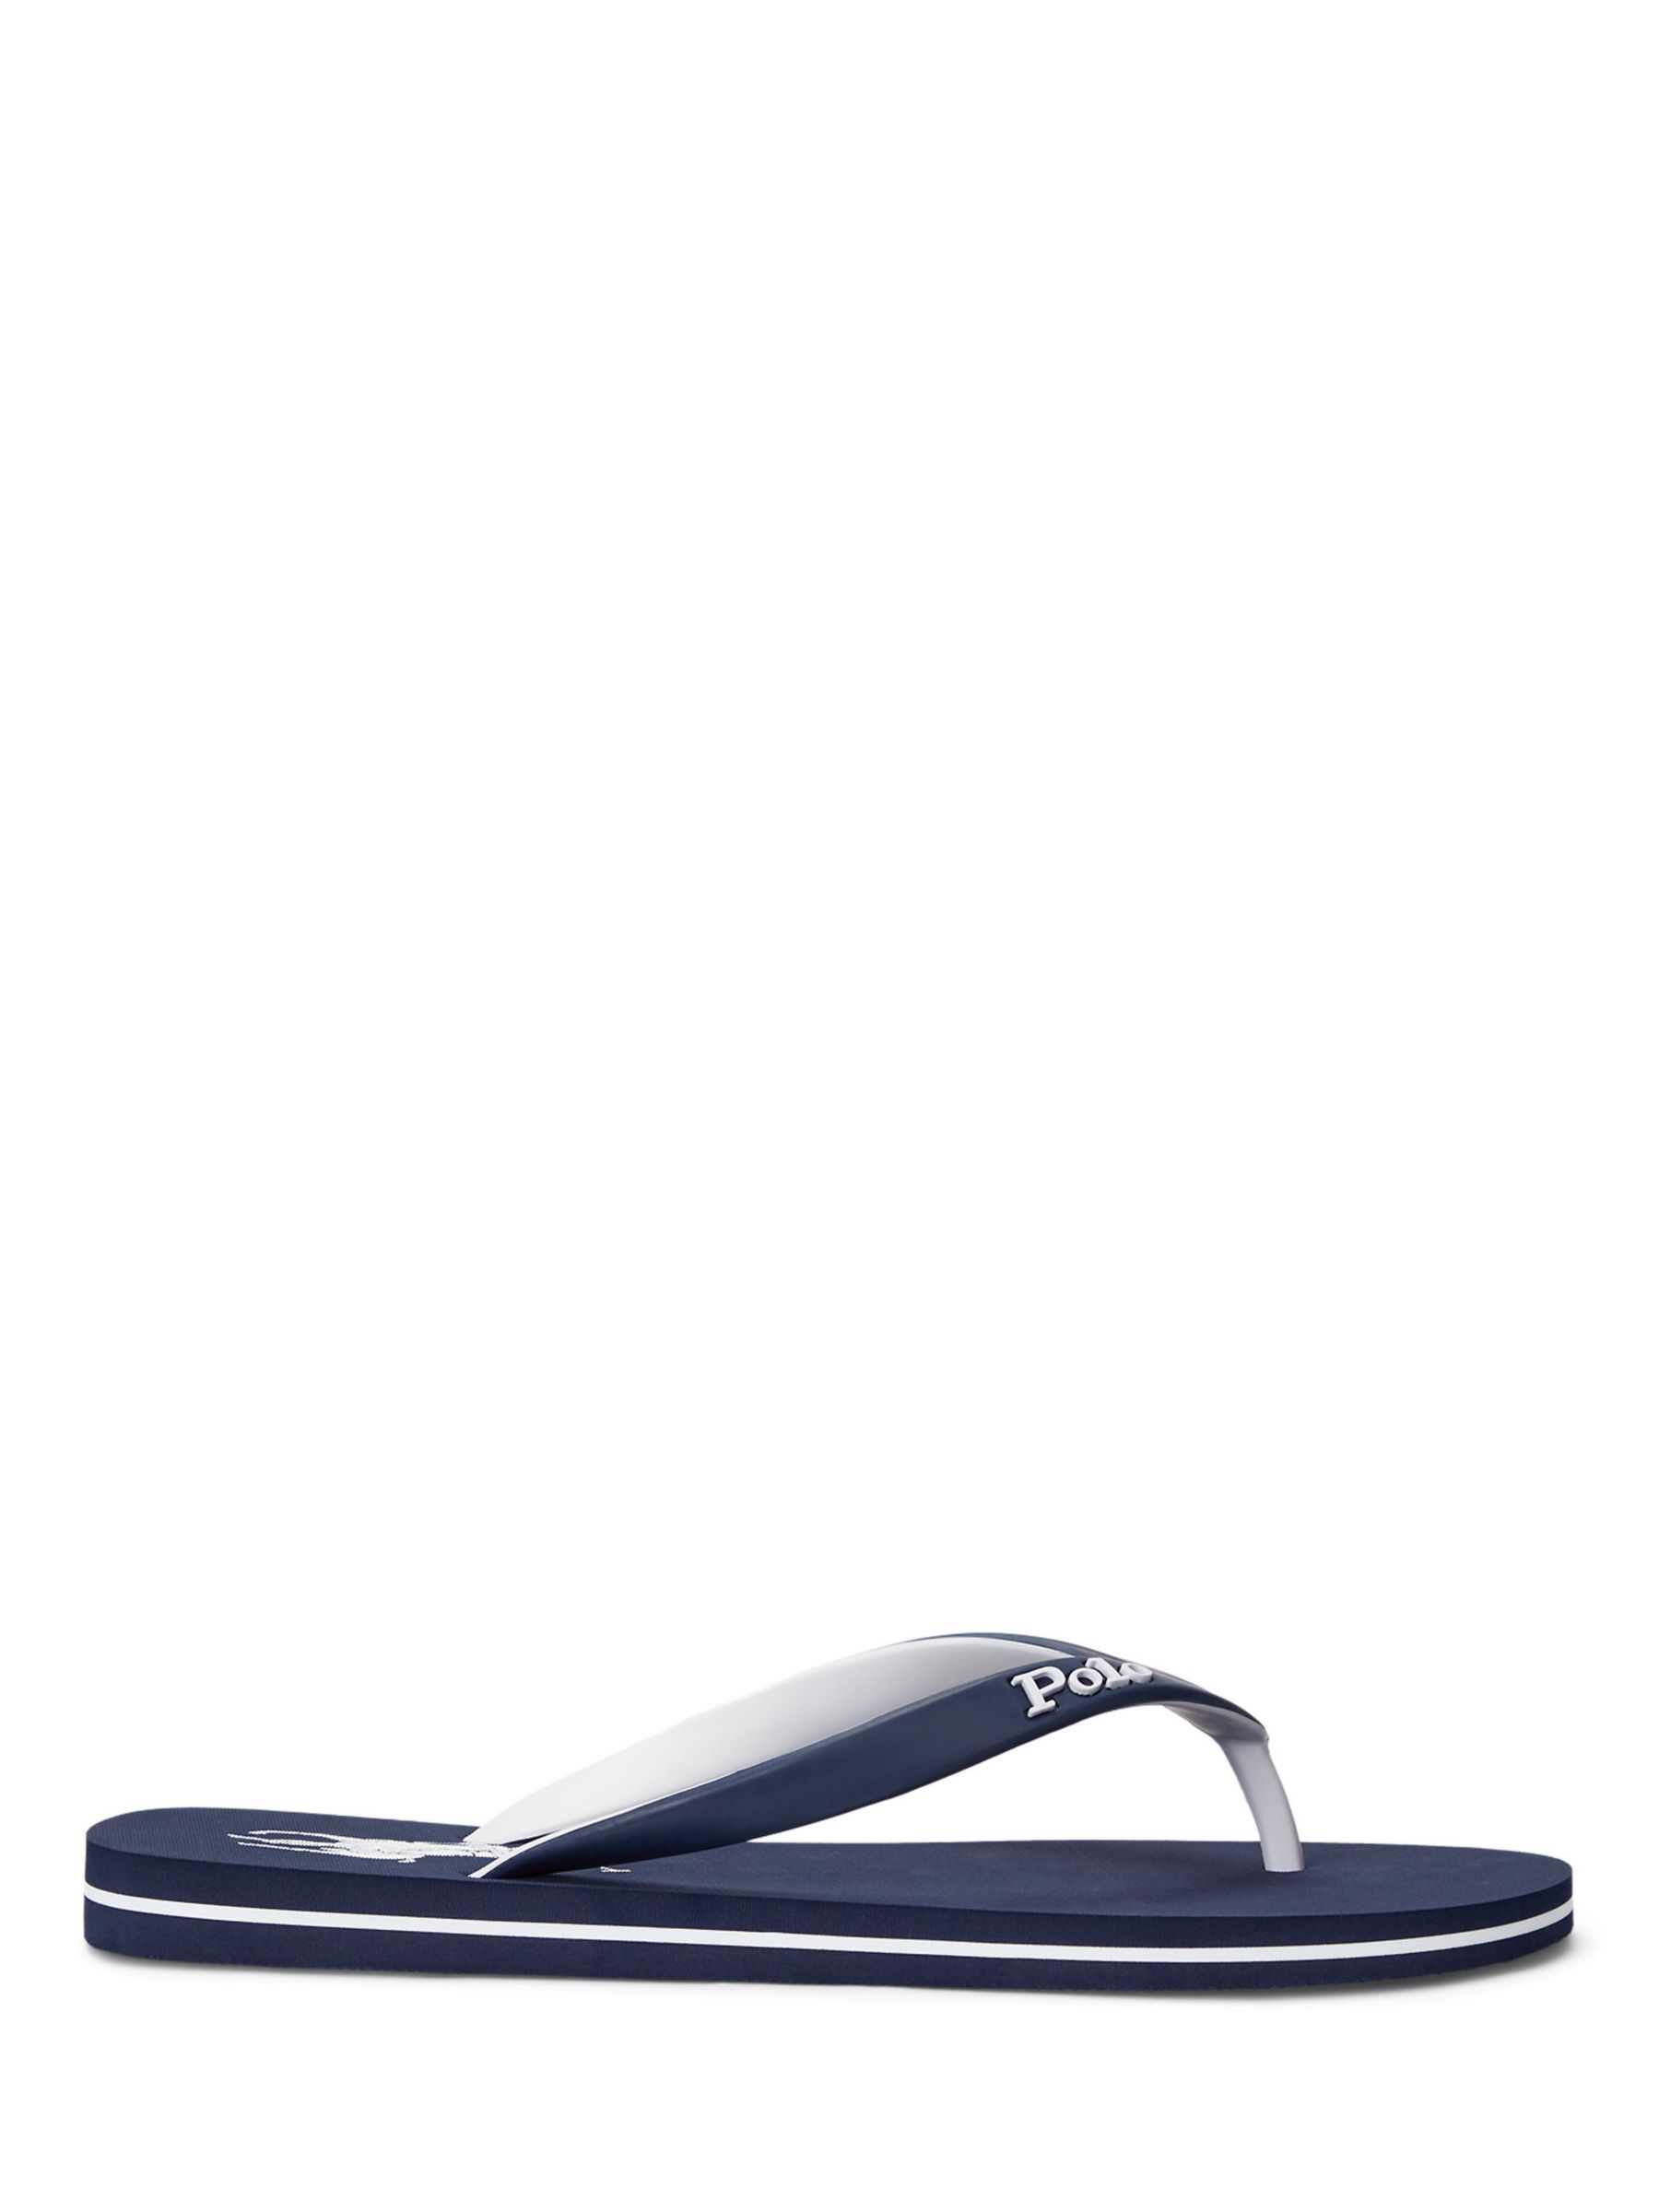 Ralph Lauren Rubber Sandals, Navy/White at John Lewis & Partners